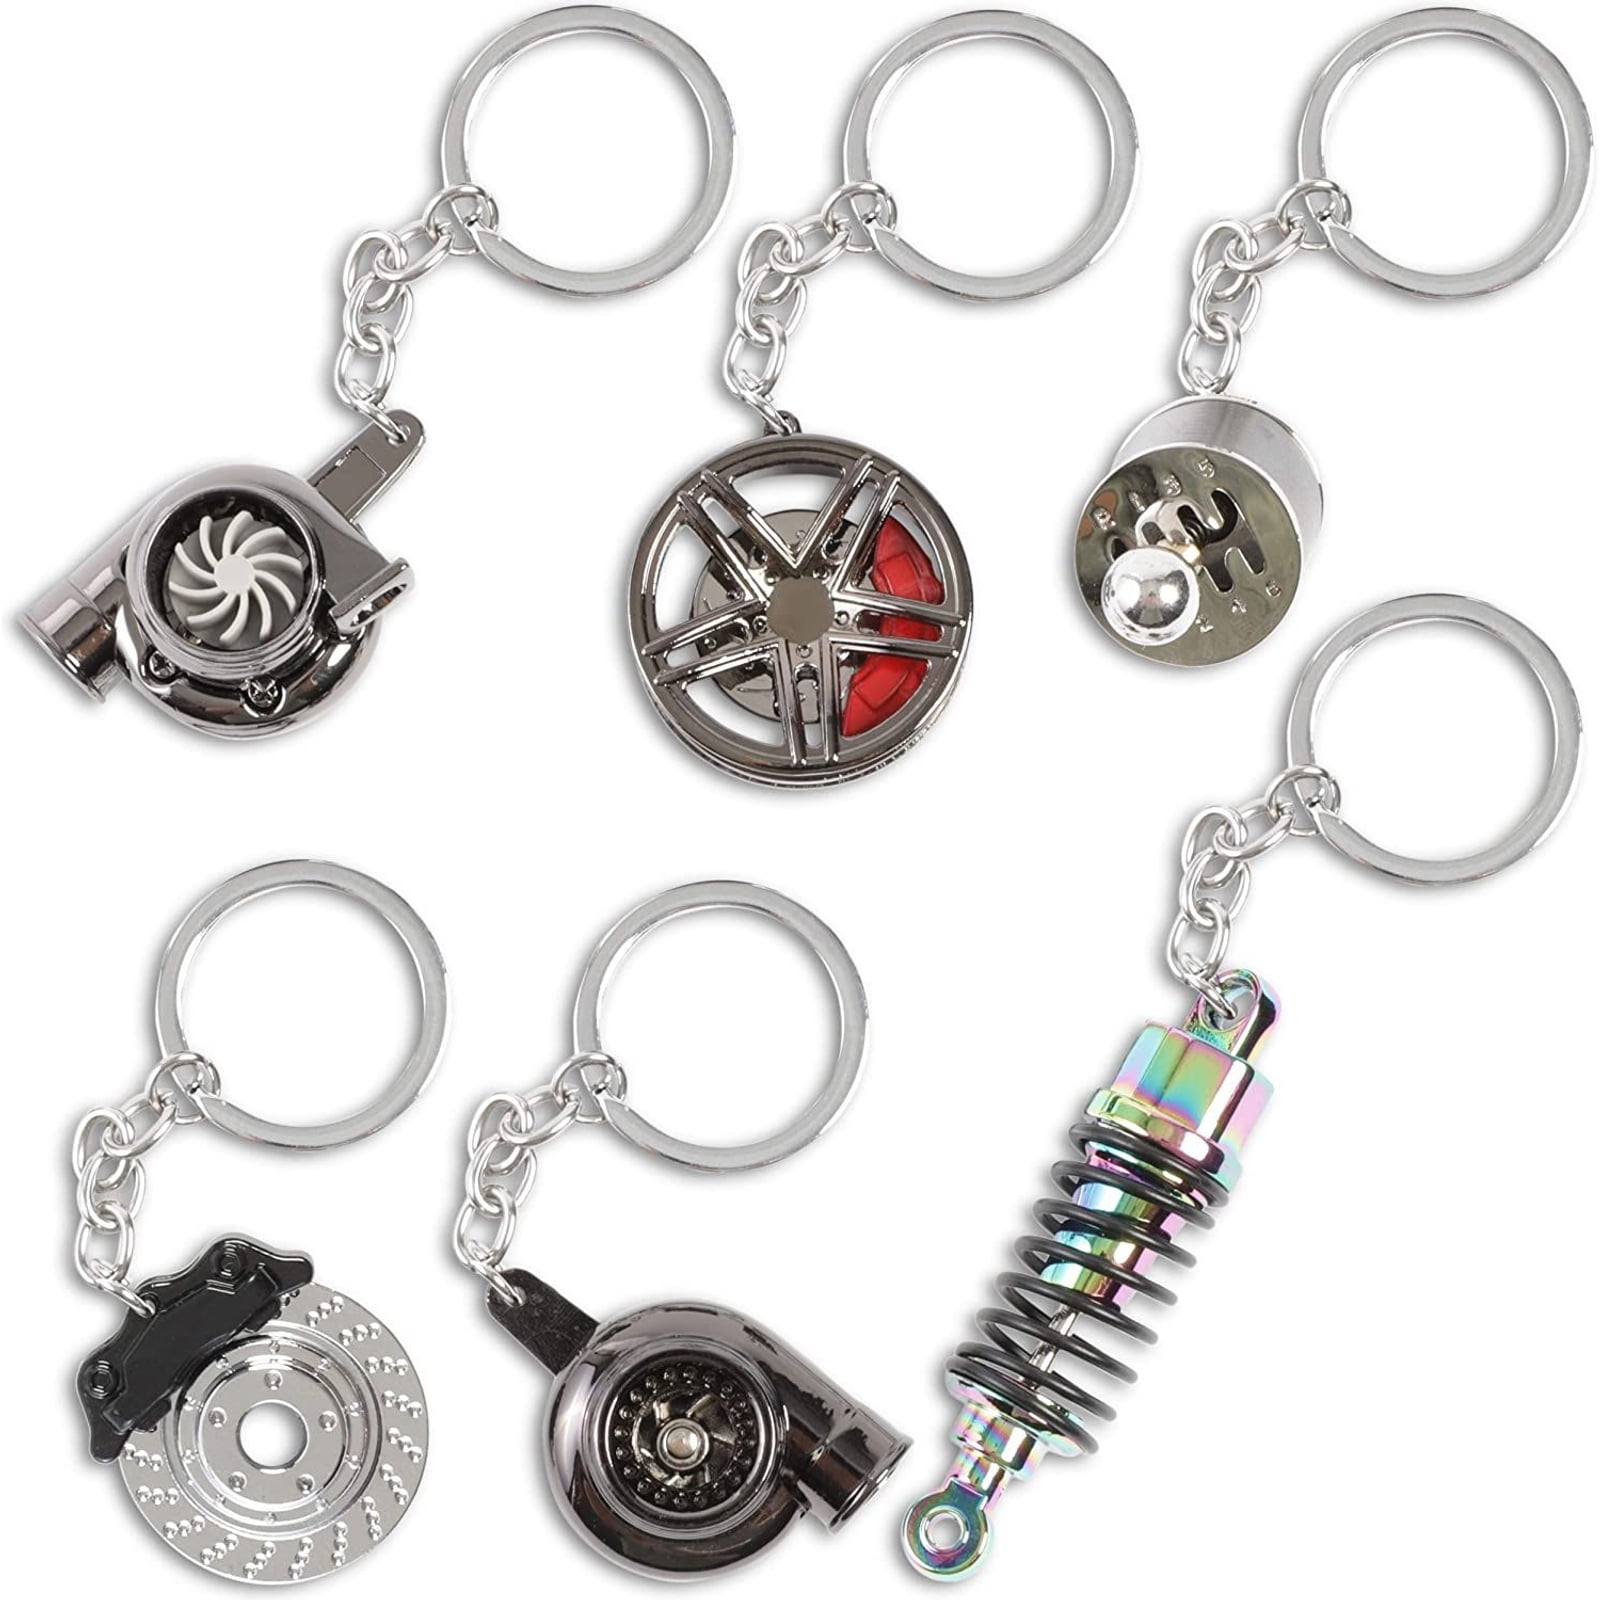 Car Auto Wheel Hub Rim Model Keychain Key Chain Cool Keyring Gift Accessories 